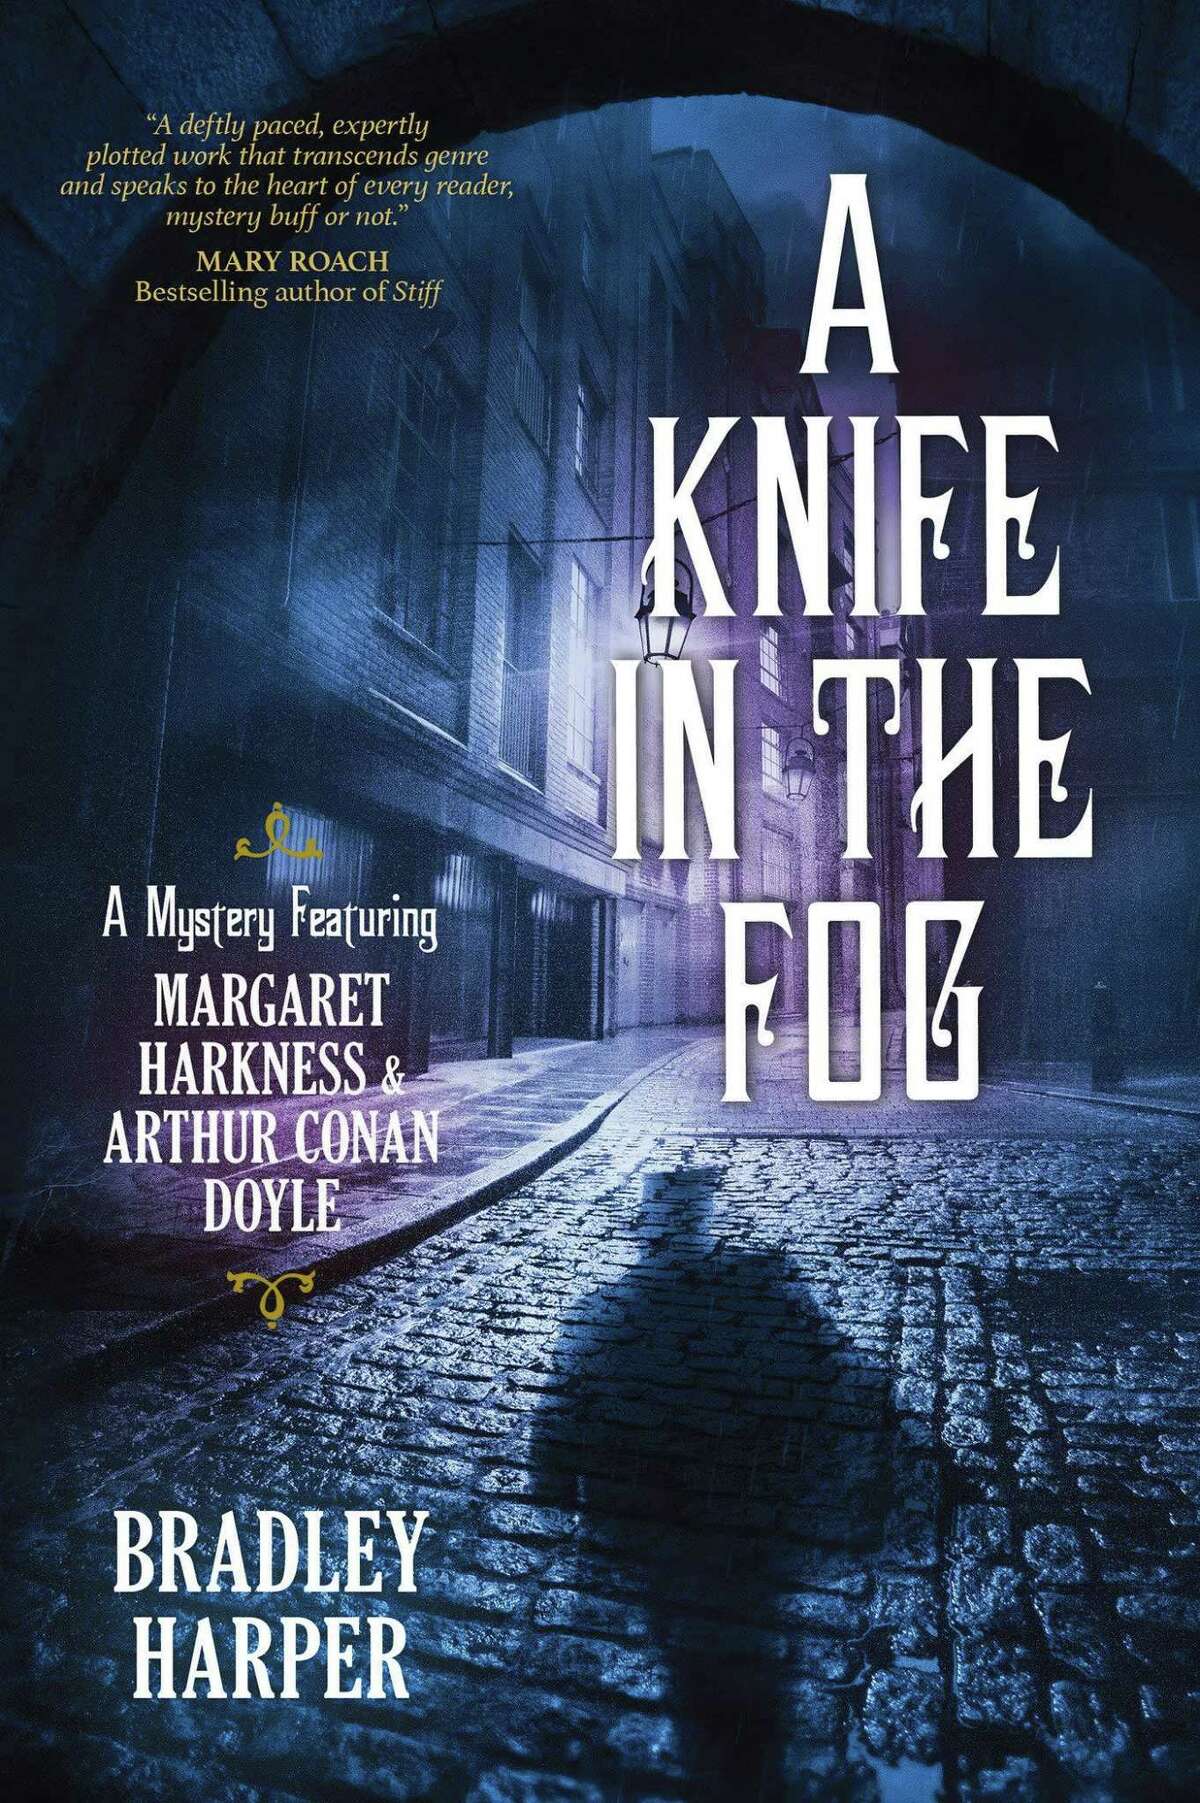 The book “A Knife in the Fog,” by Bradley Harper